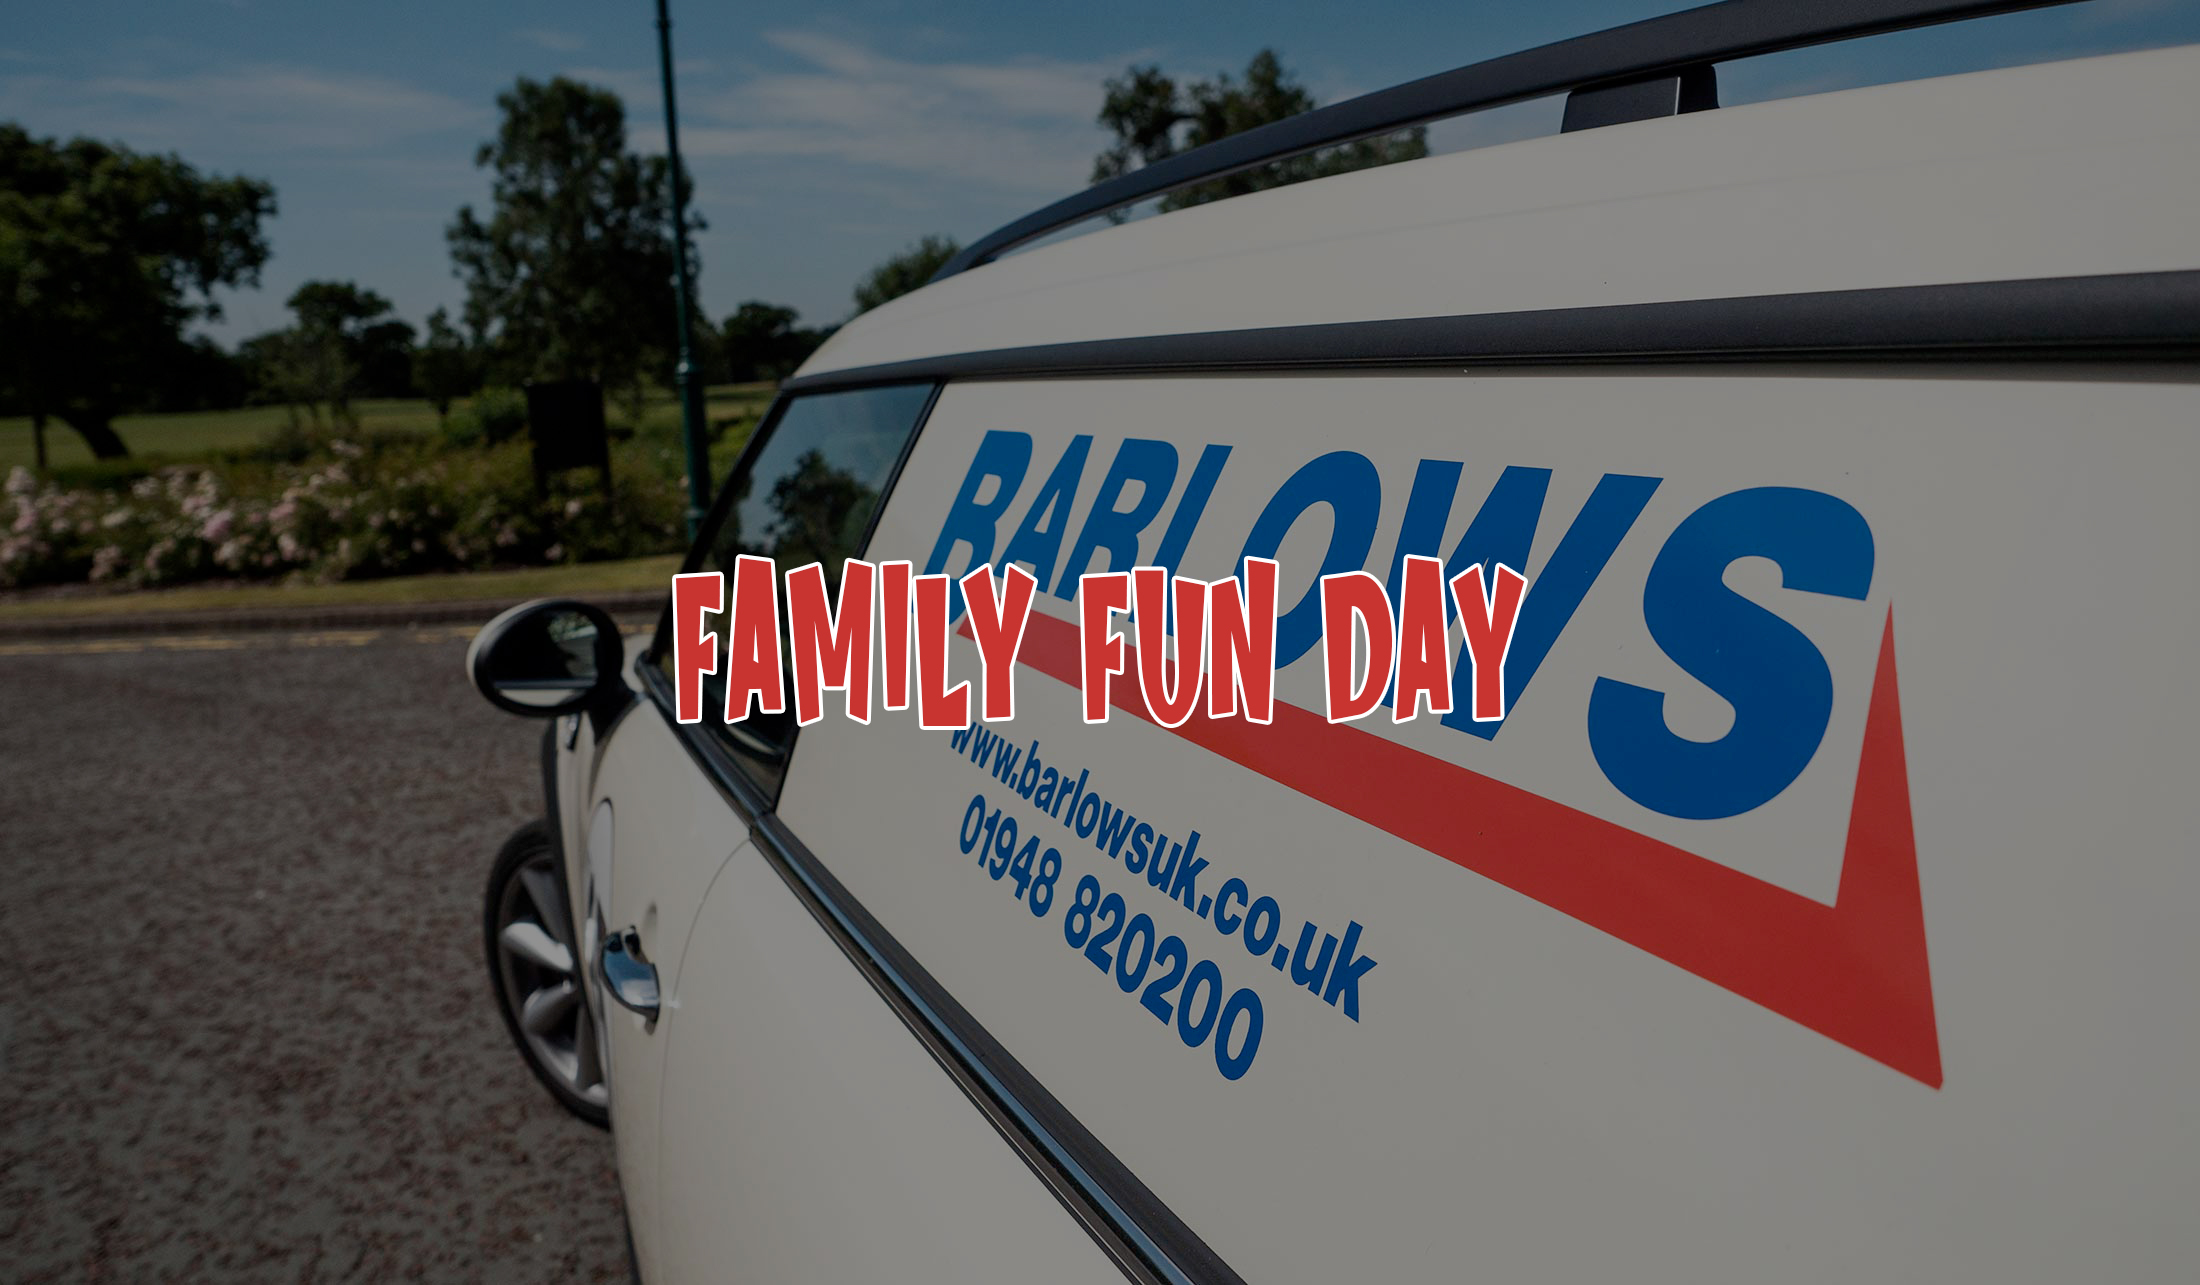 Barlows Family Fun Day